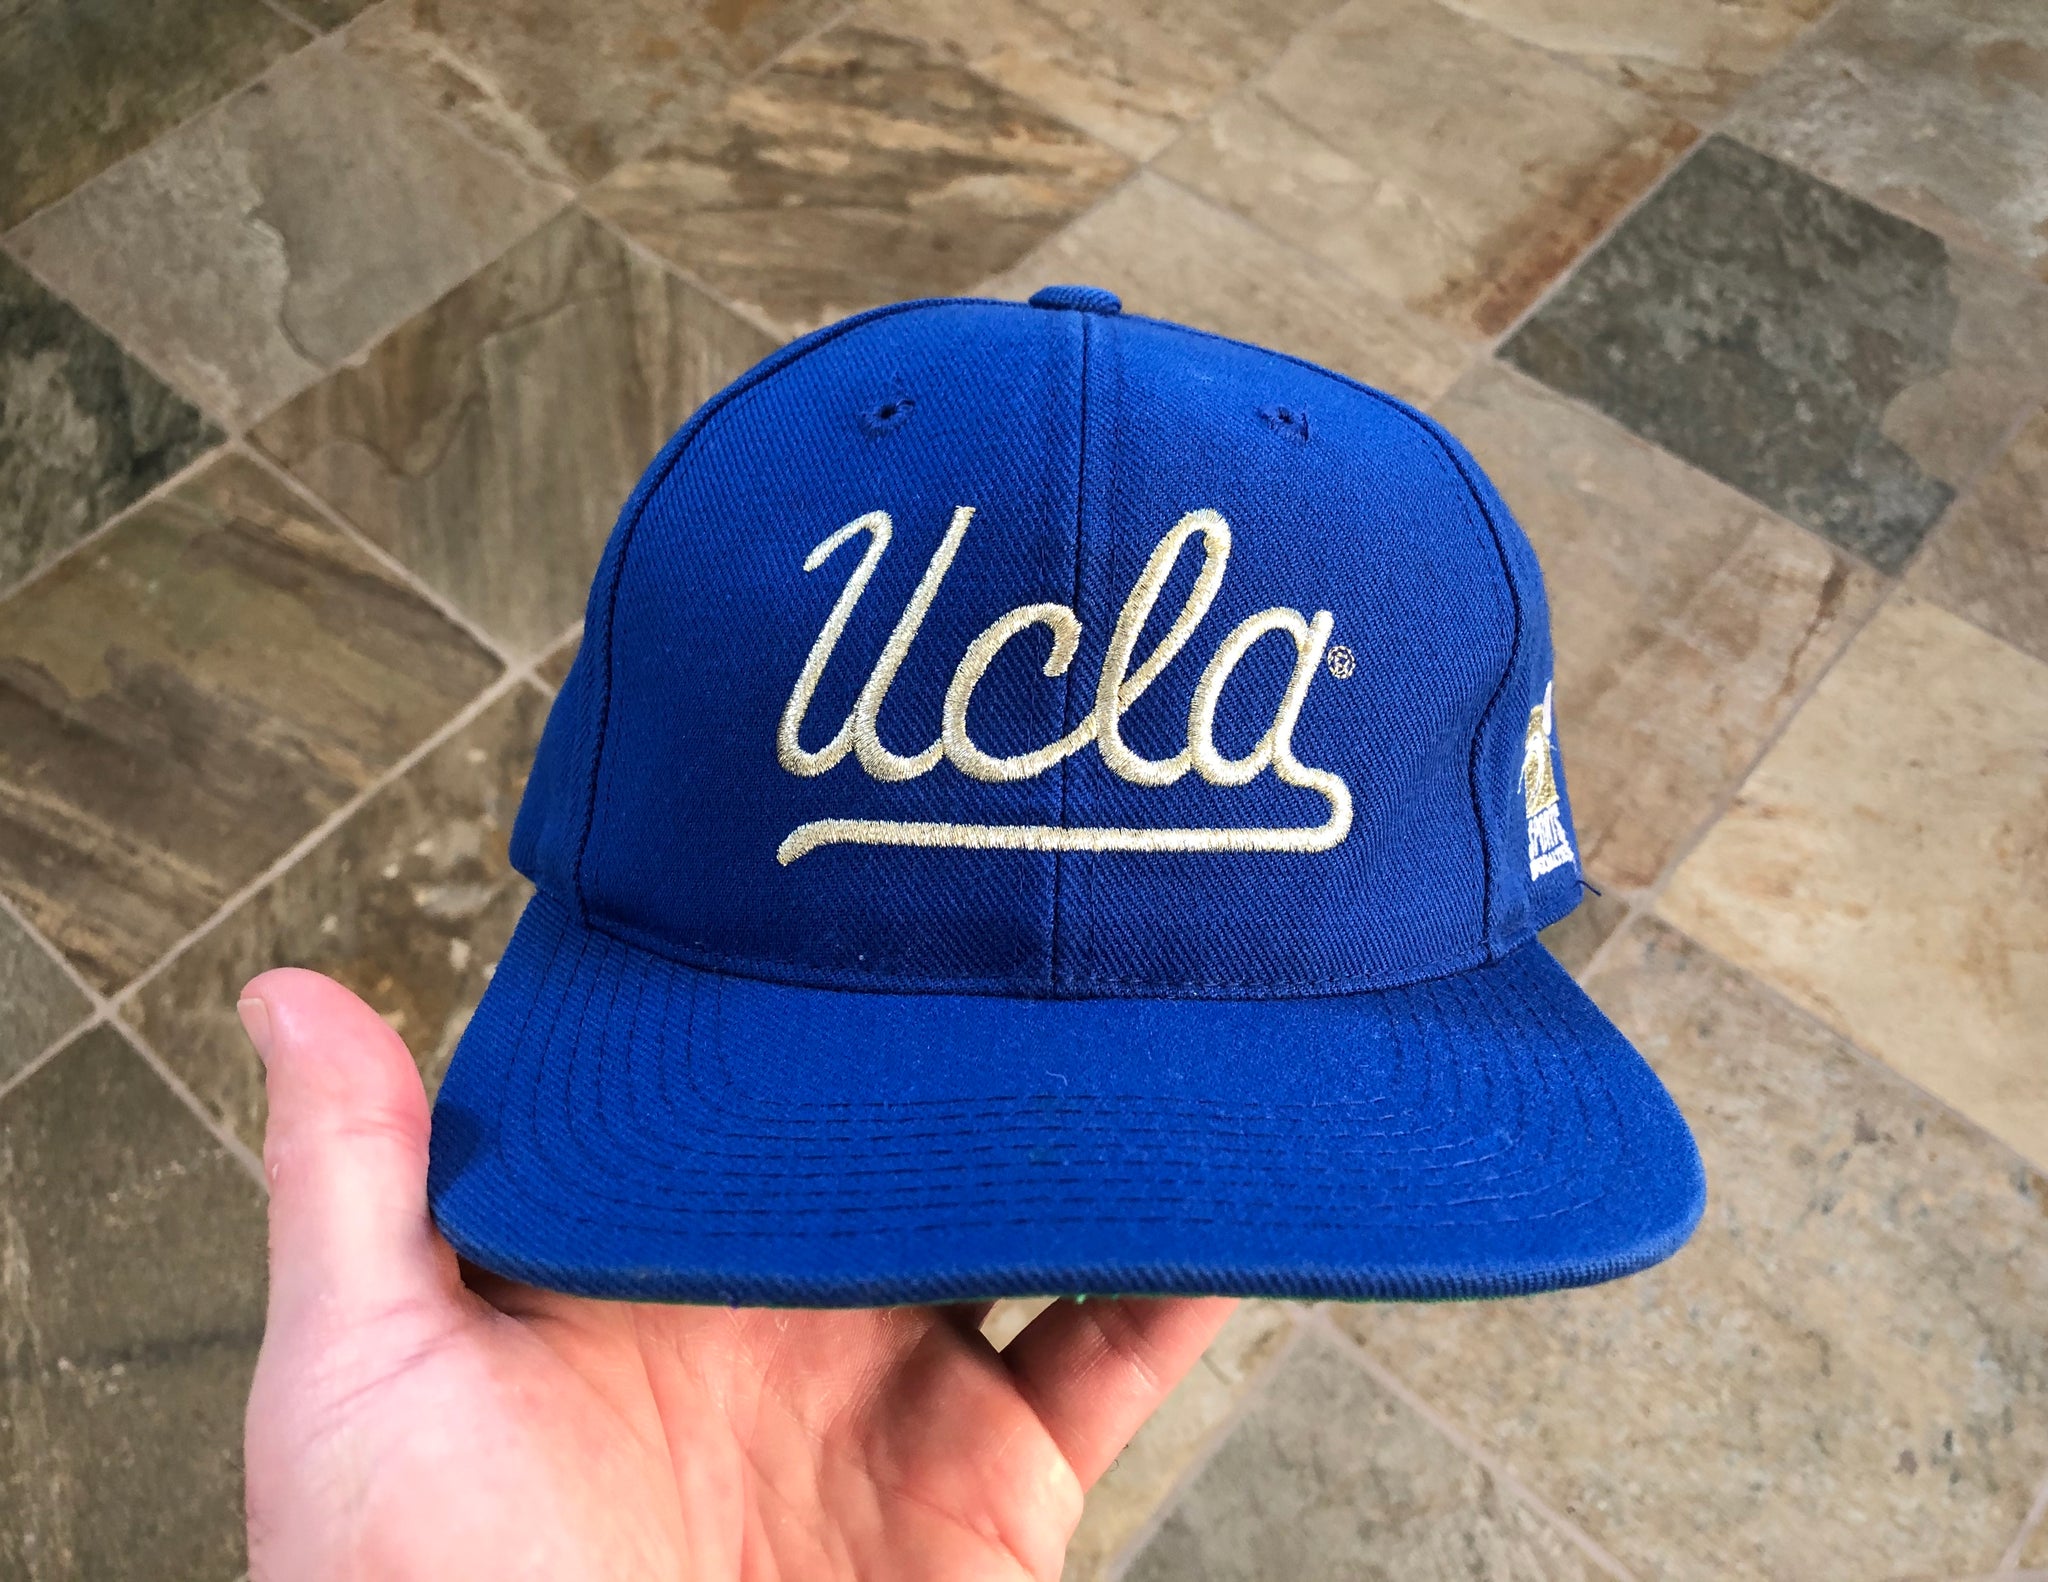 The game UCLA キャップ vintage 90s カレッジ | labiela.com